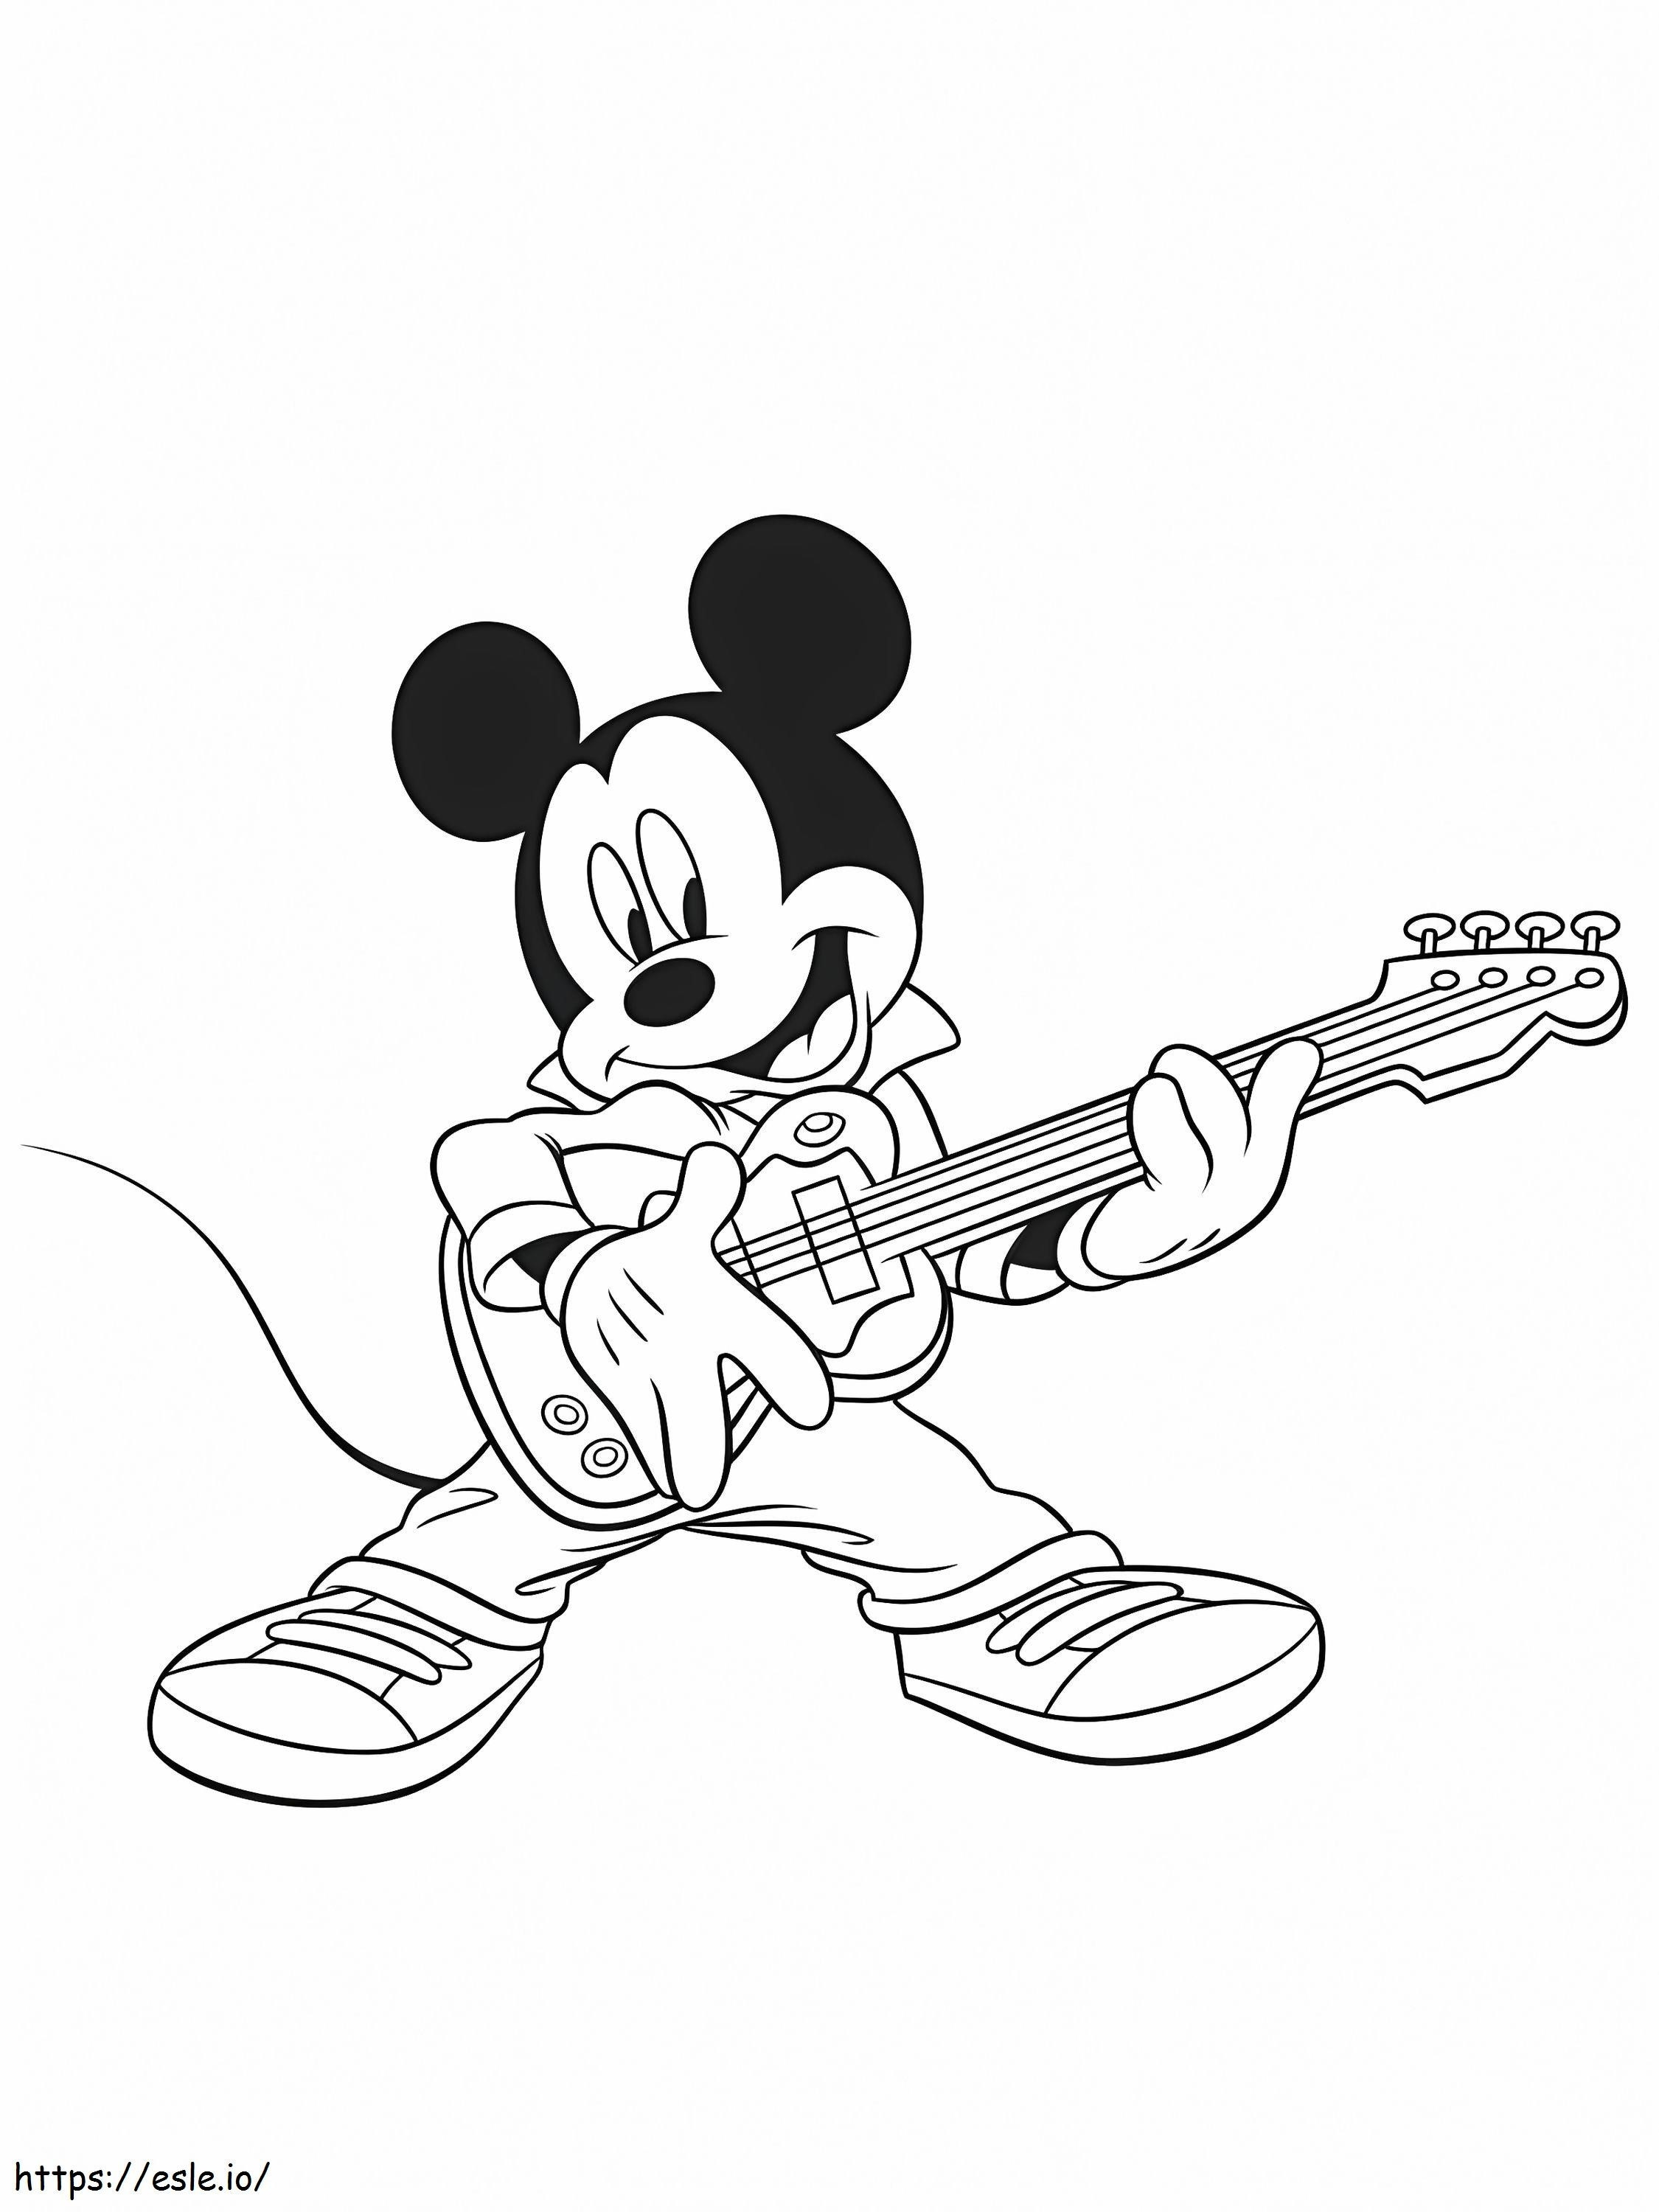 Mickey Mouse spielt Gitarre ausmalbilder